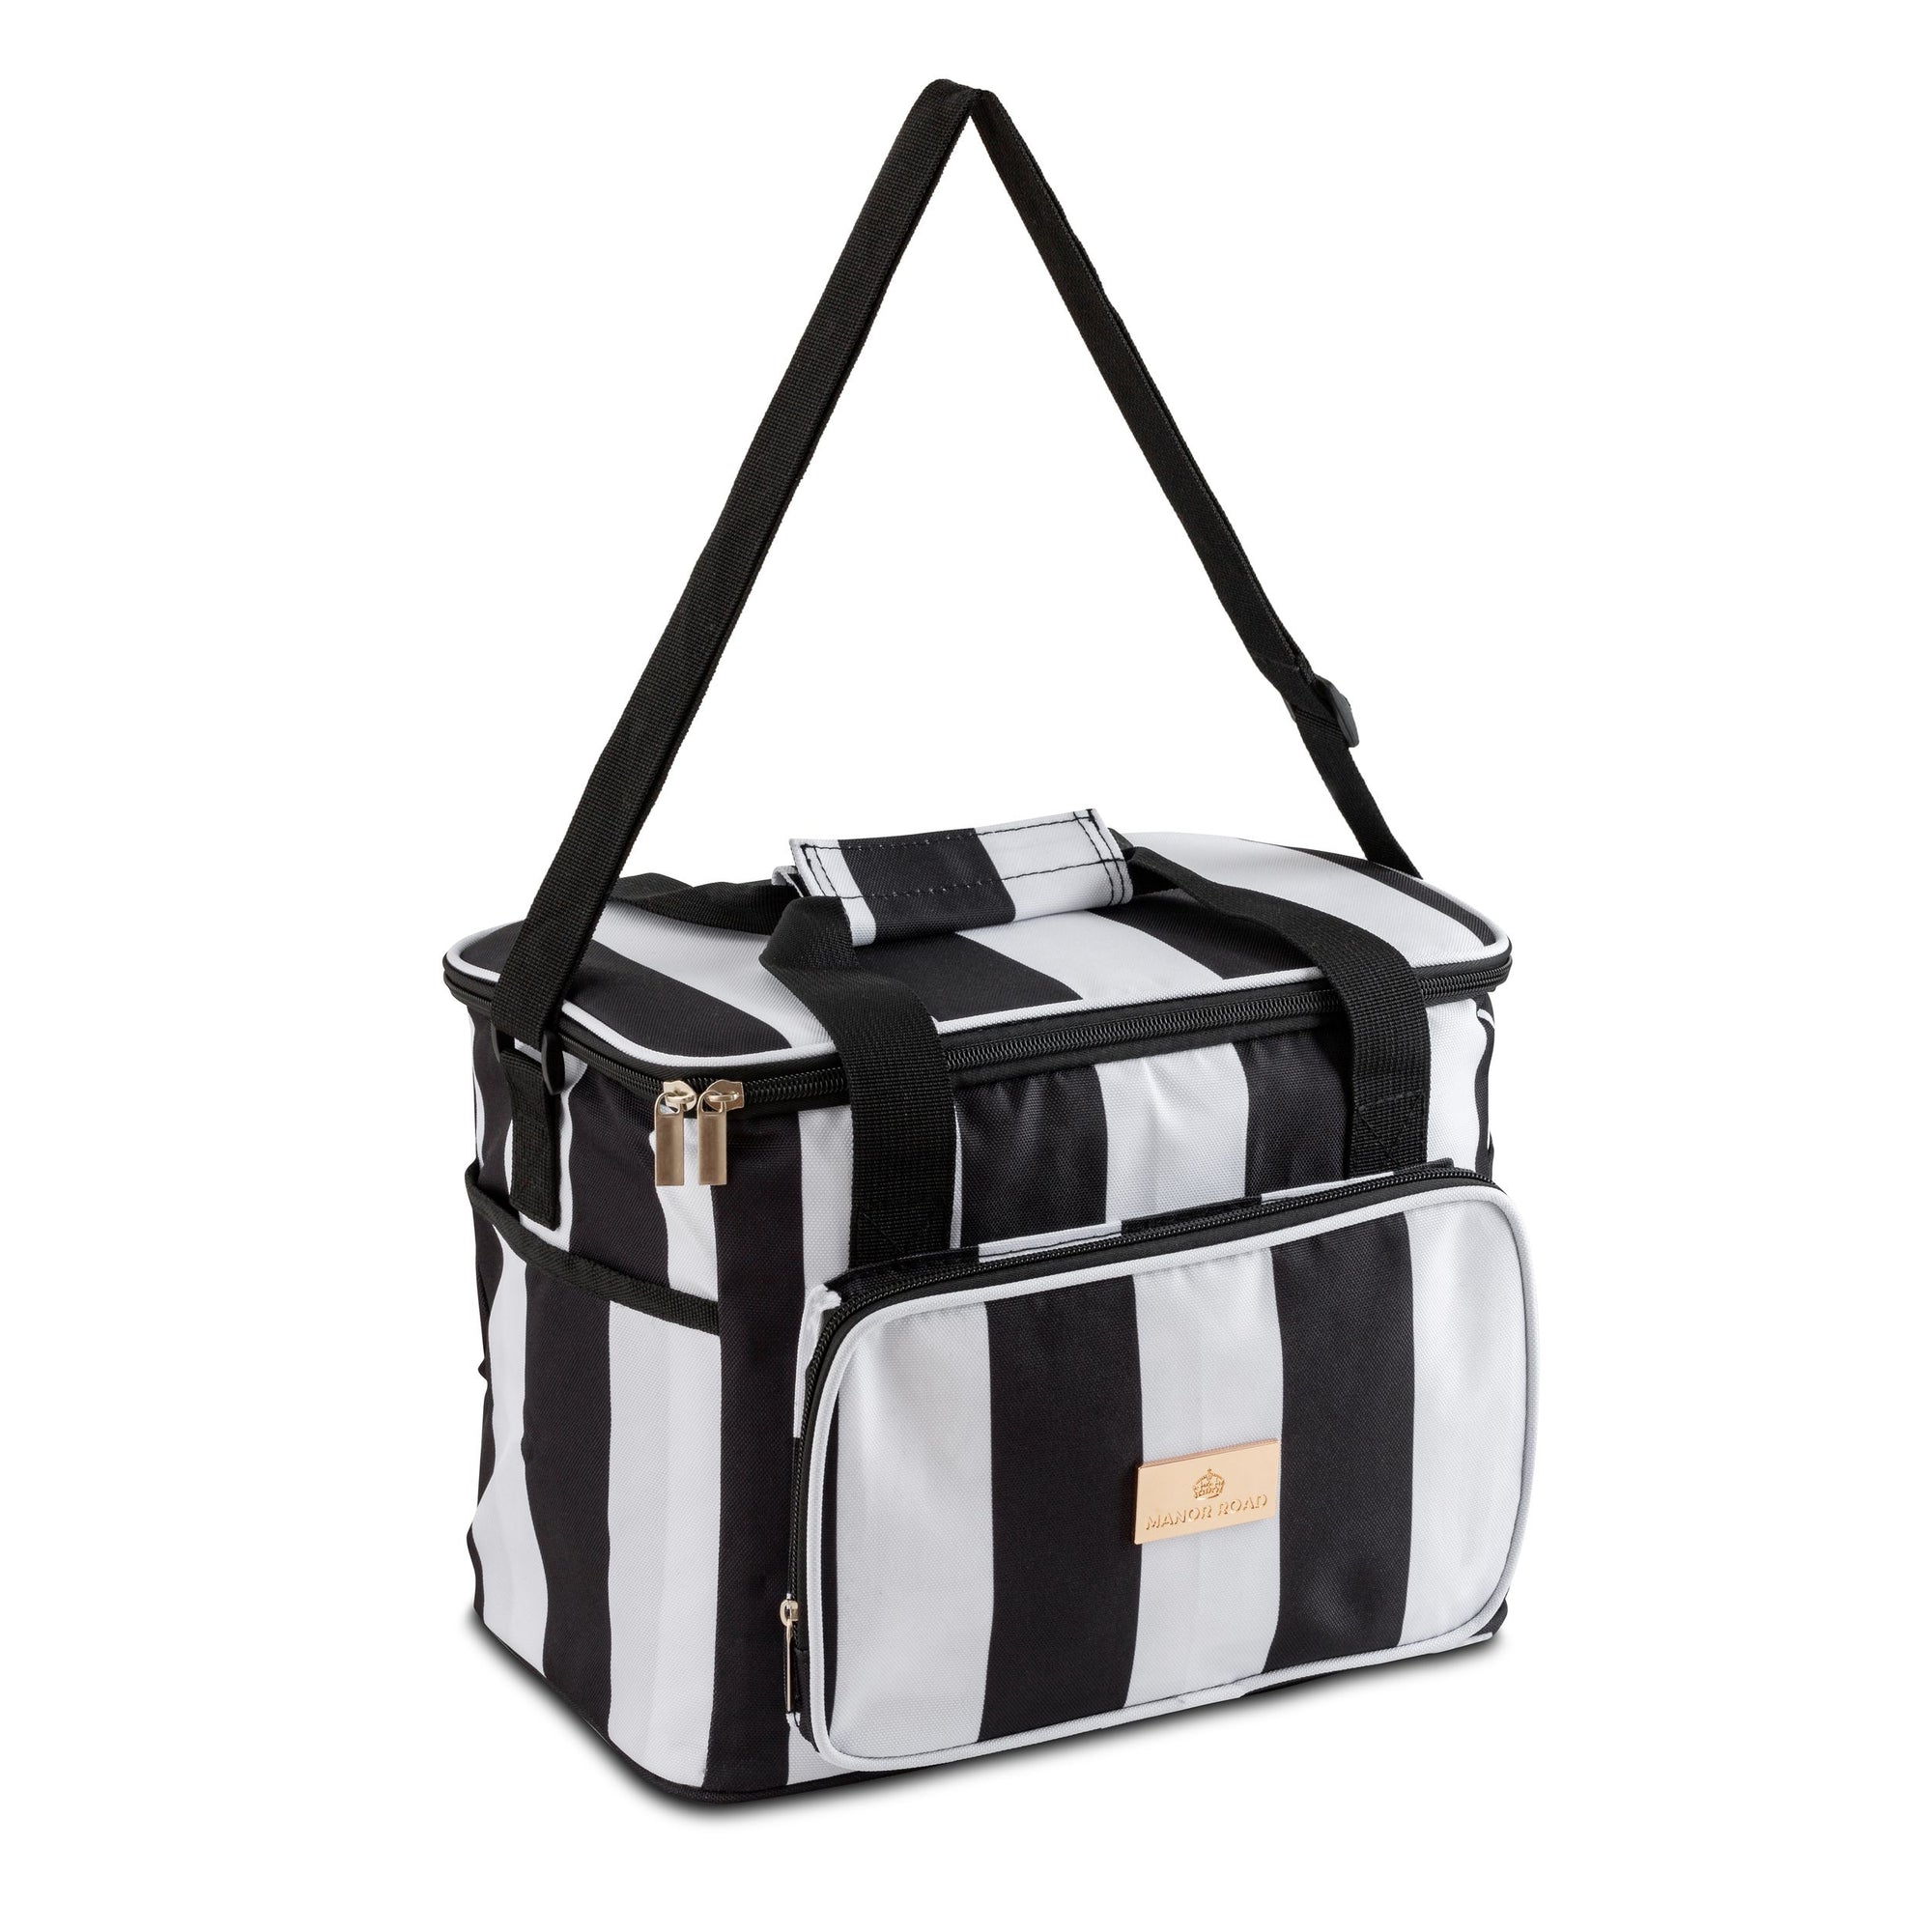 Manor Road Black & White Stripe Cooler Bag